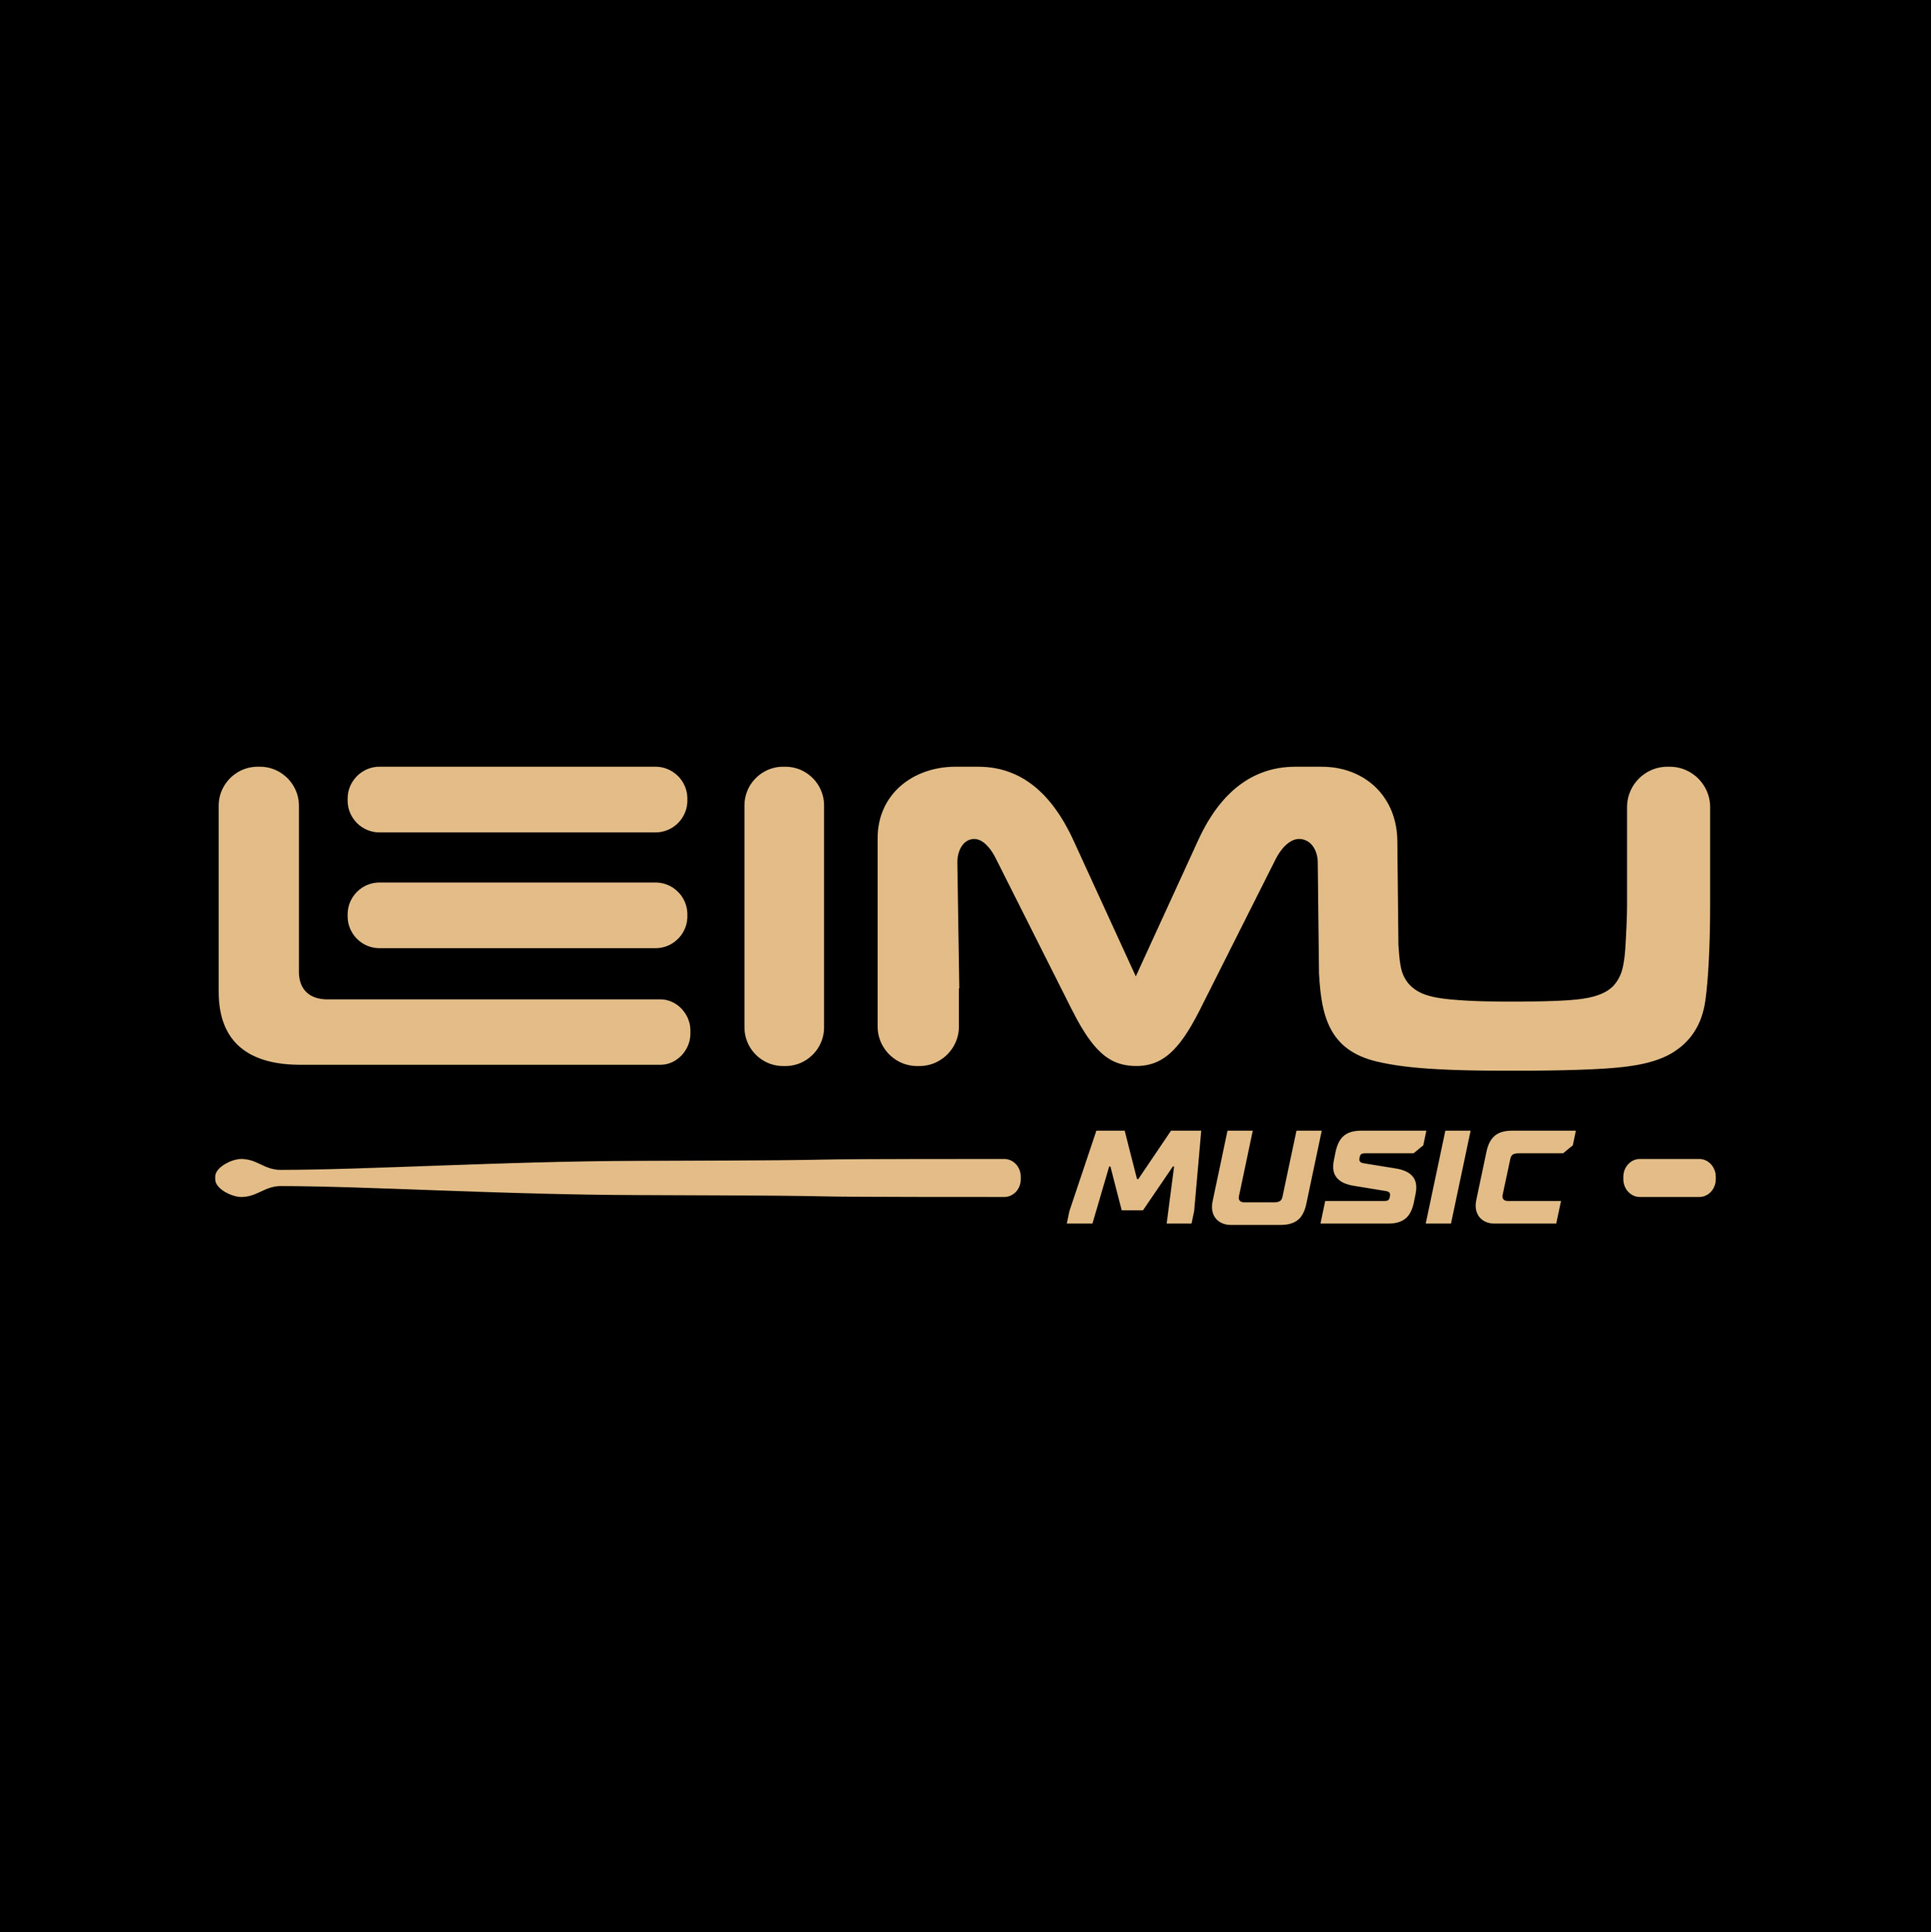 Leimu Music logo Therwiz Design